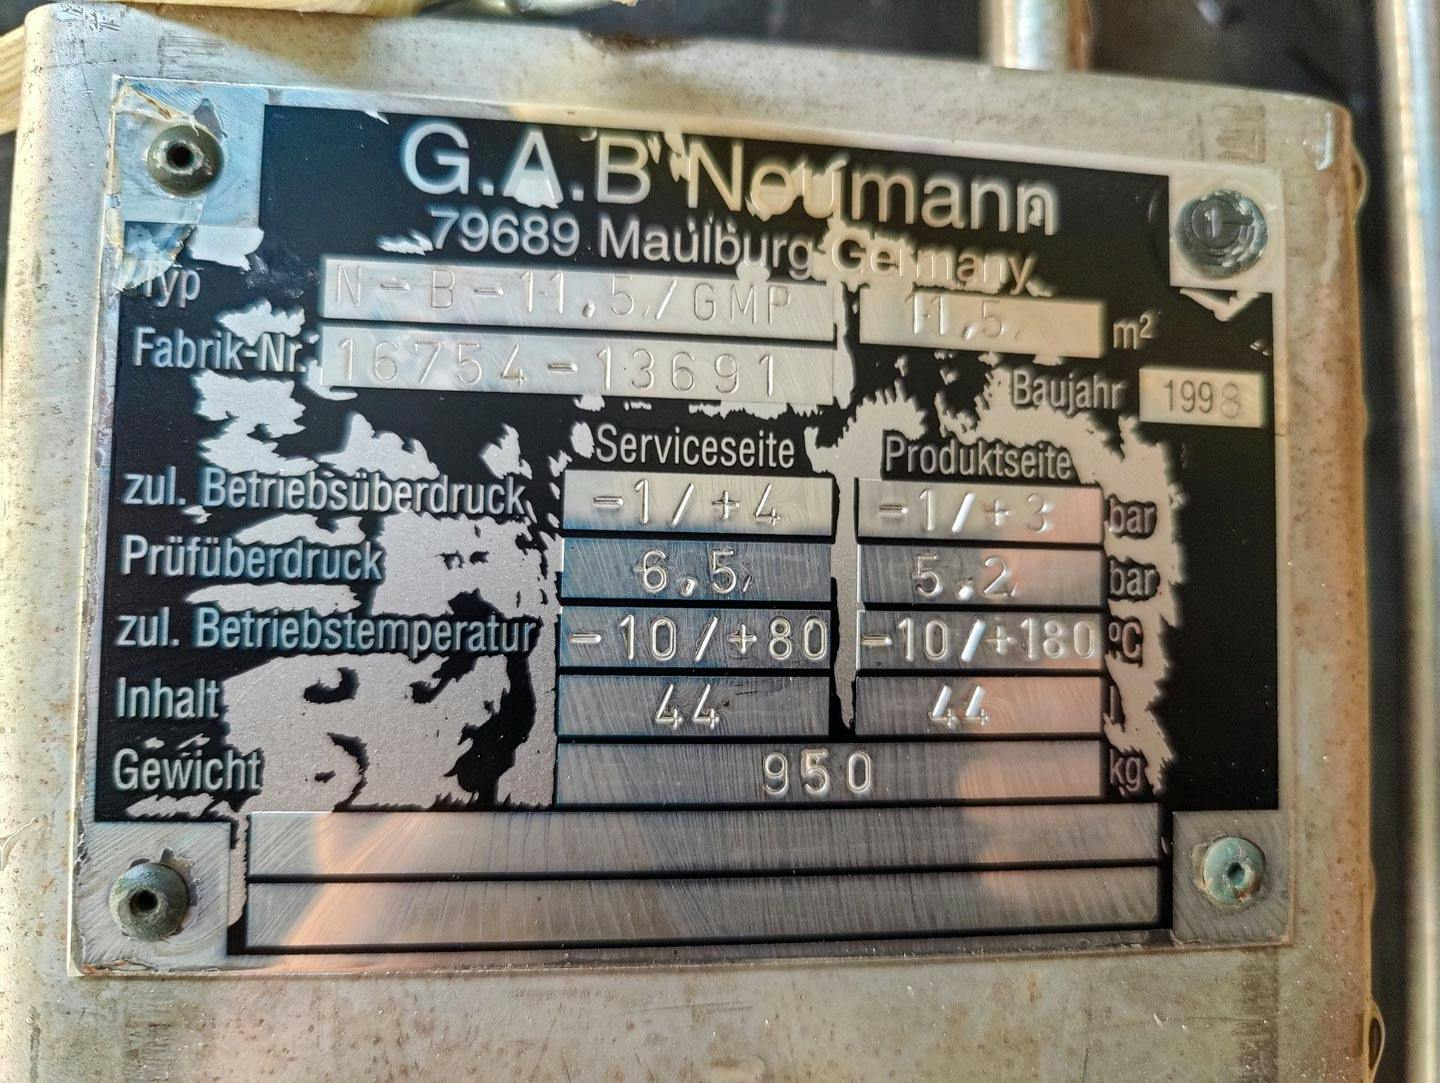 Gab Neumann N-B-11,5/GMP - Shell and tube heat exchanger - image 8